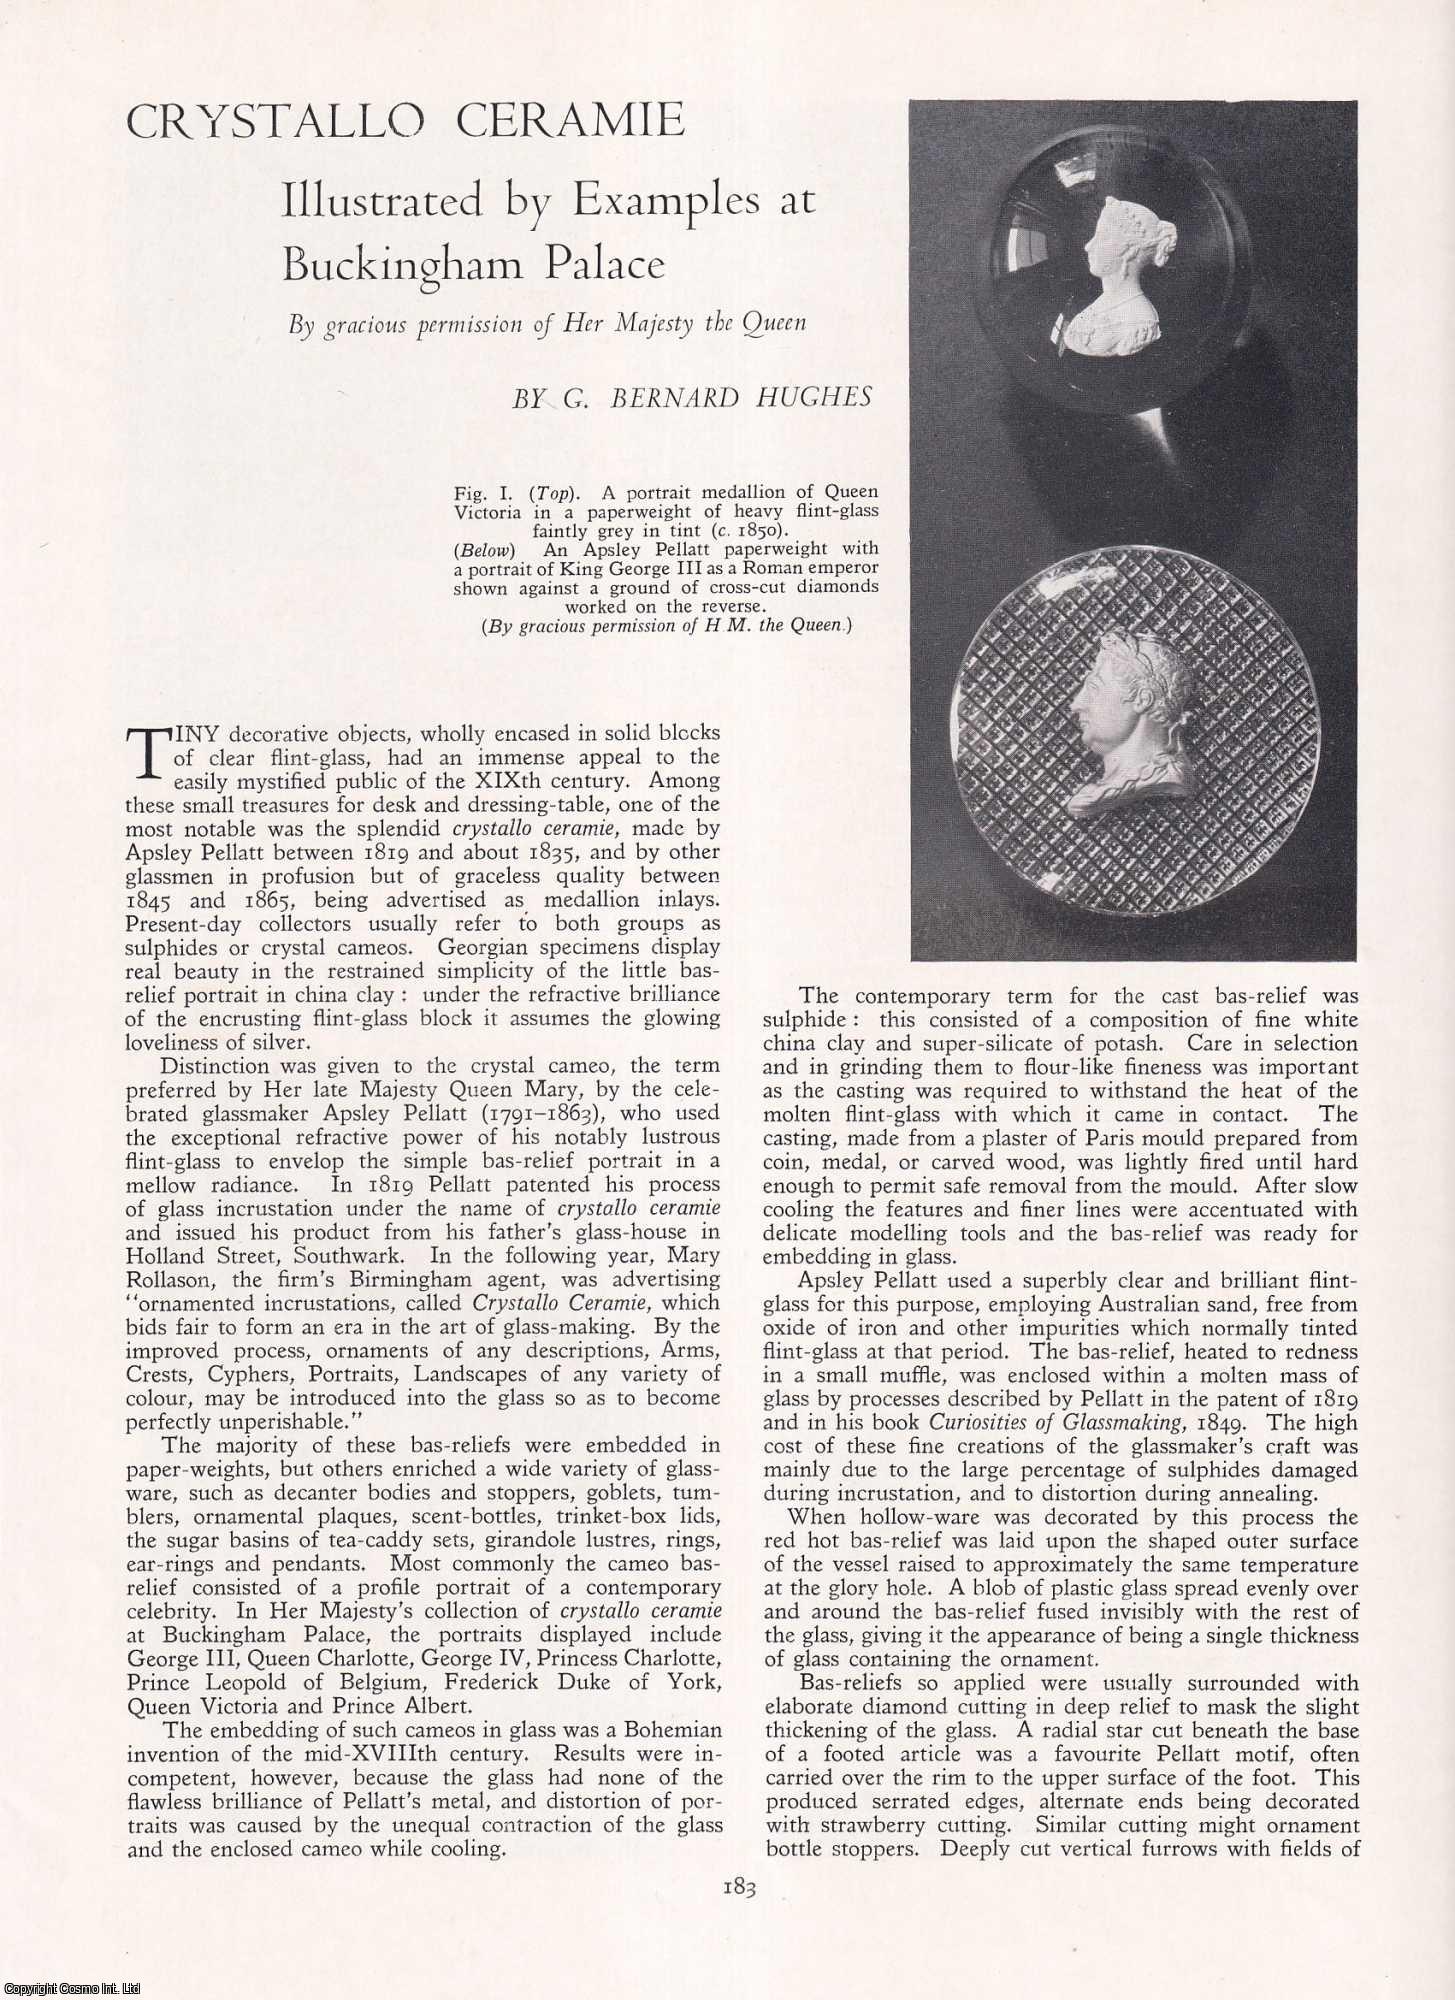 G. Bernard Hughes - Crystallo Ceramie: Illustrated Examples at Buckingham Palace. An original article from Apollo, International Magazine of the Arts, 1953.